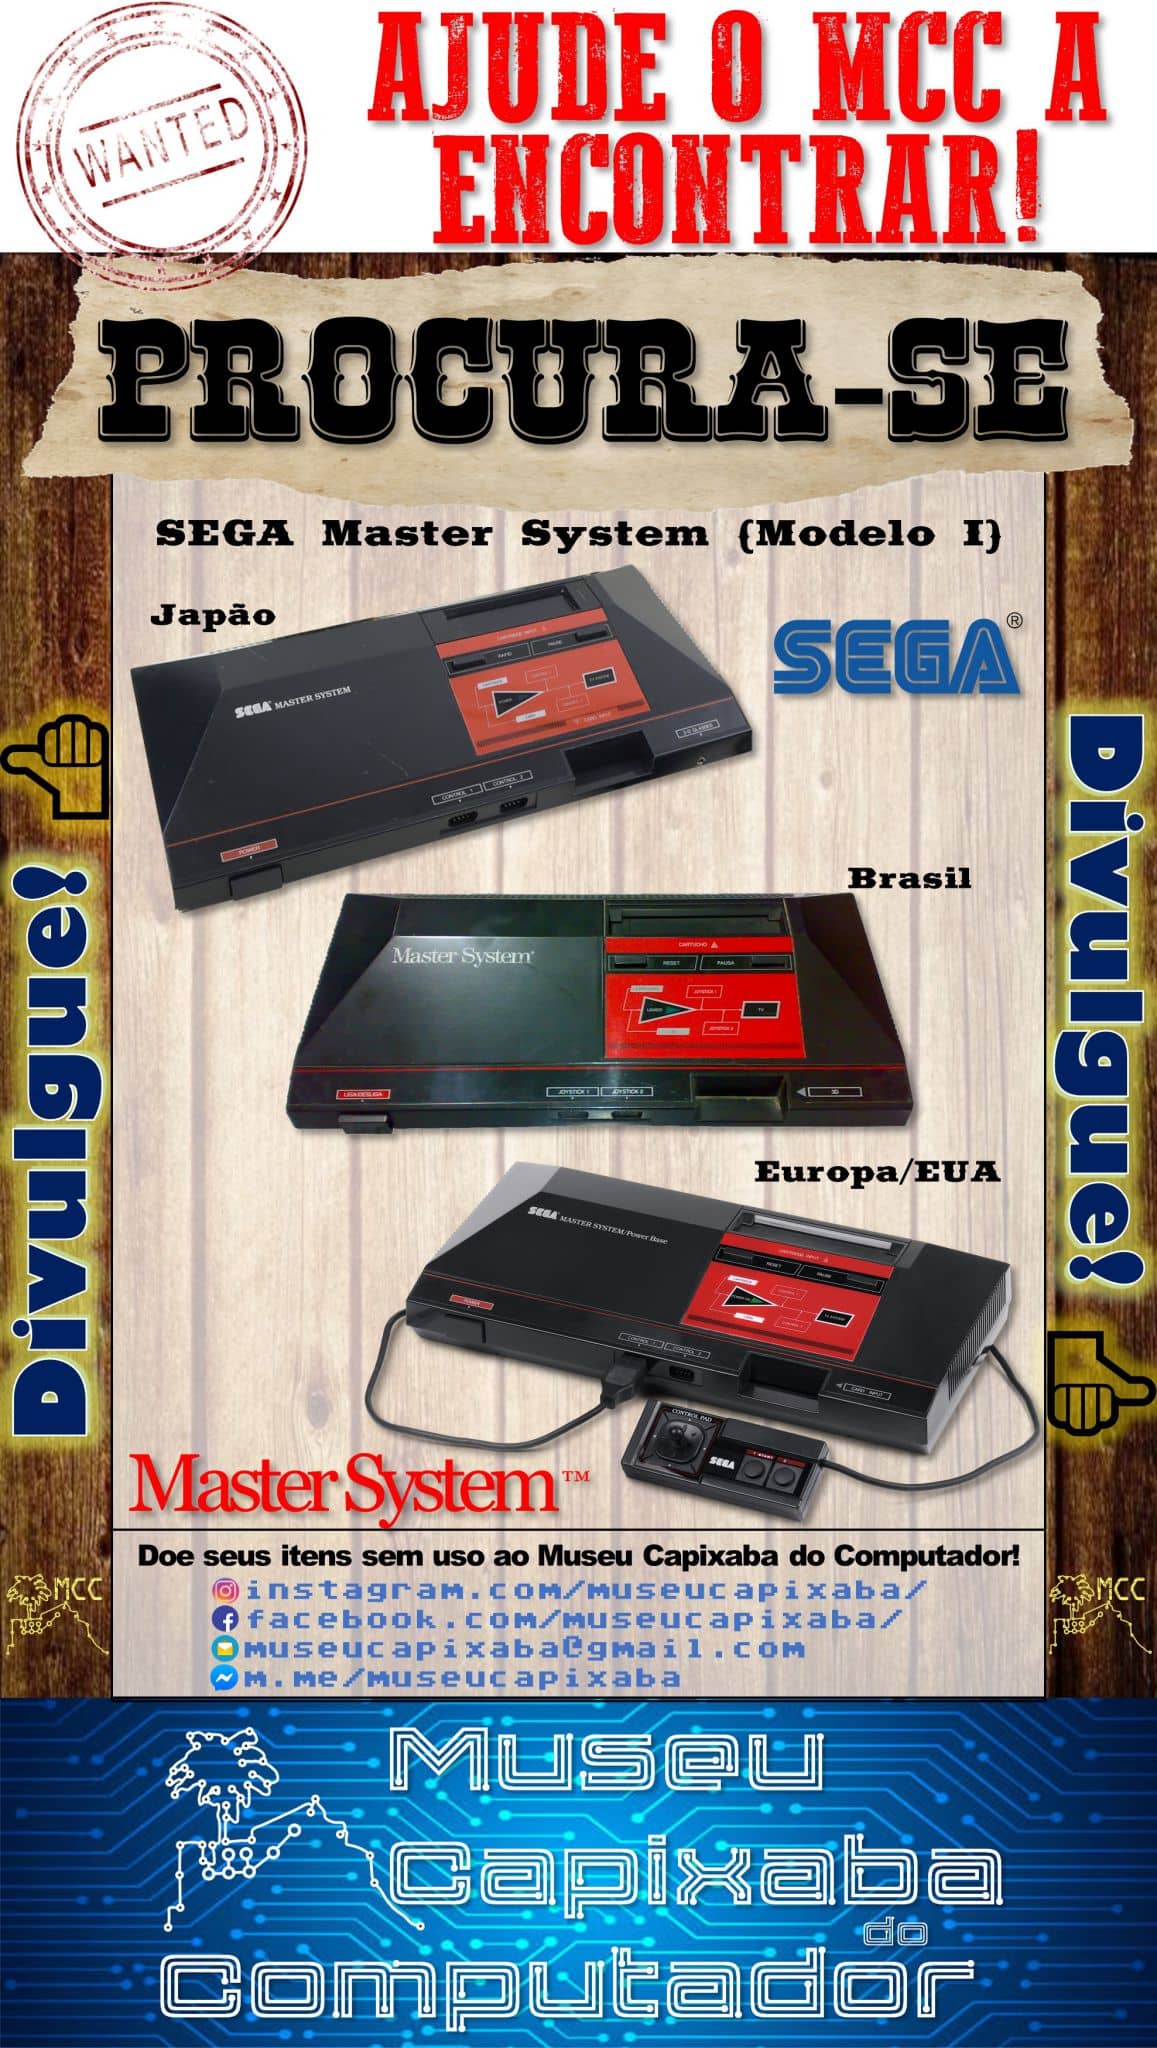 Sega Mastersystem